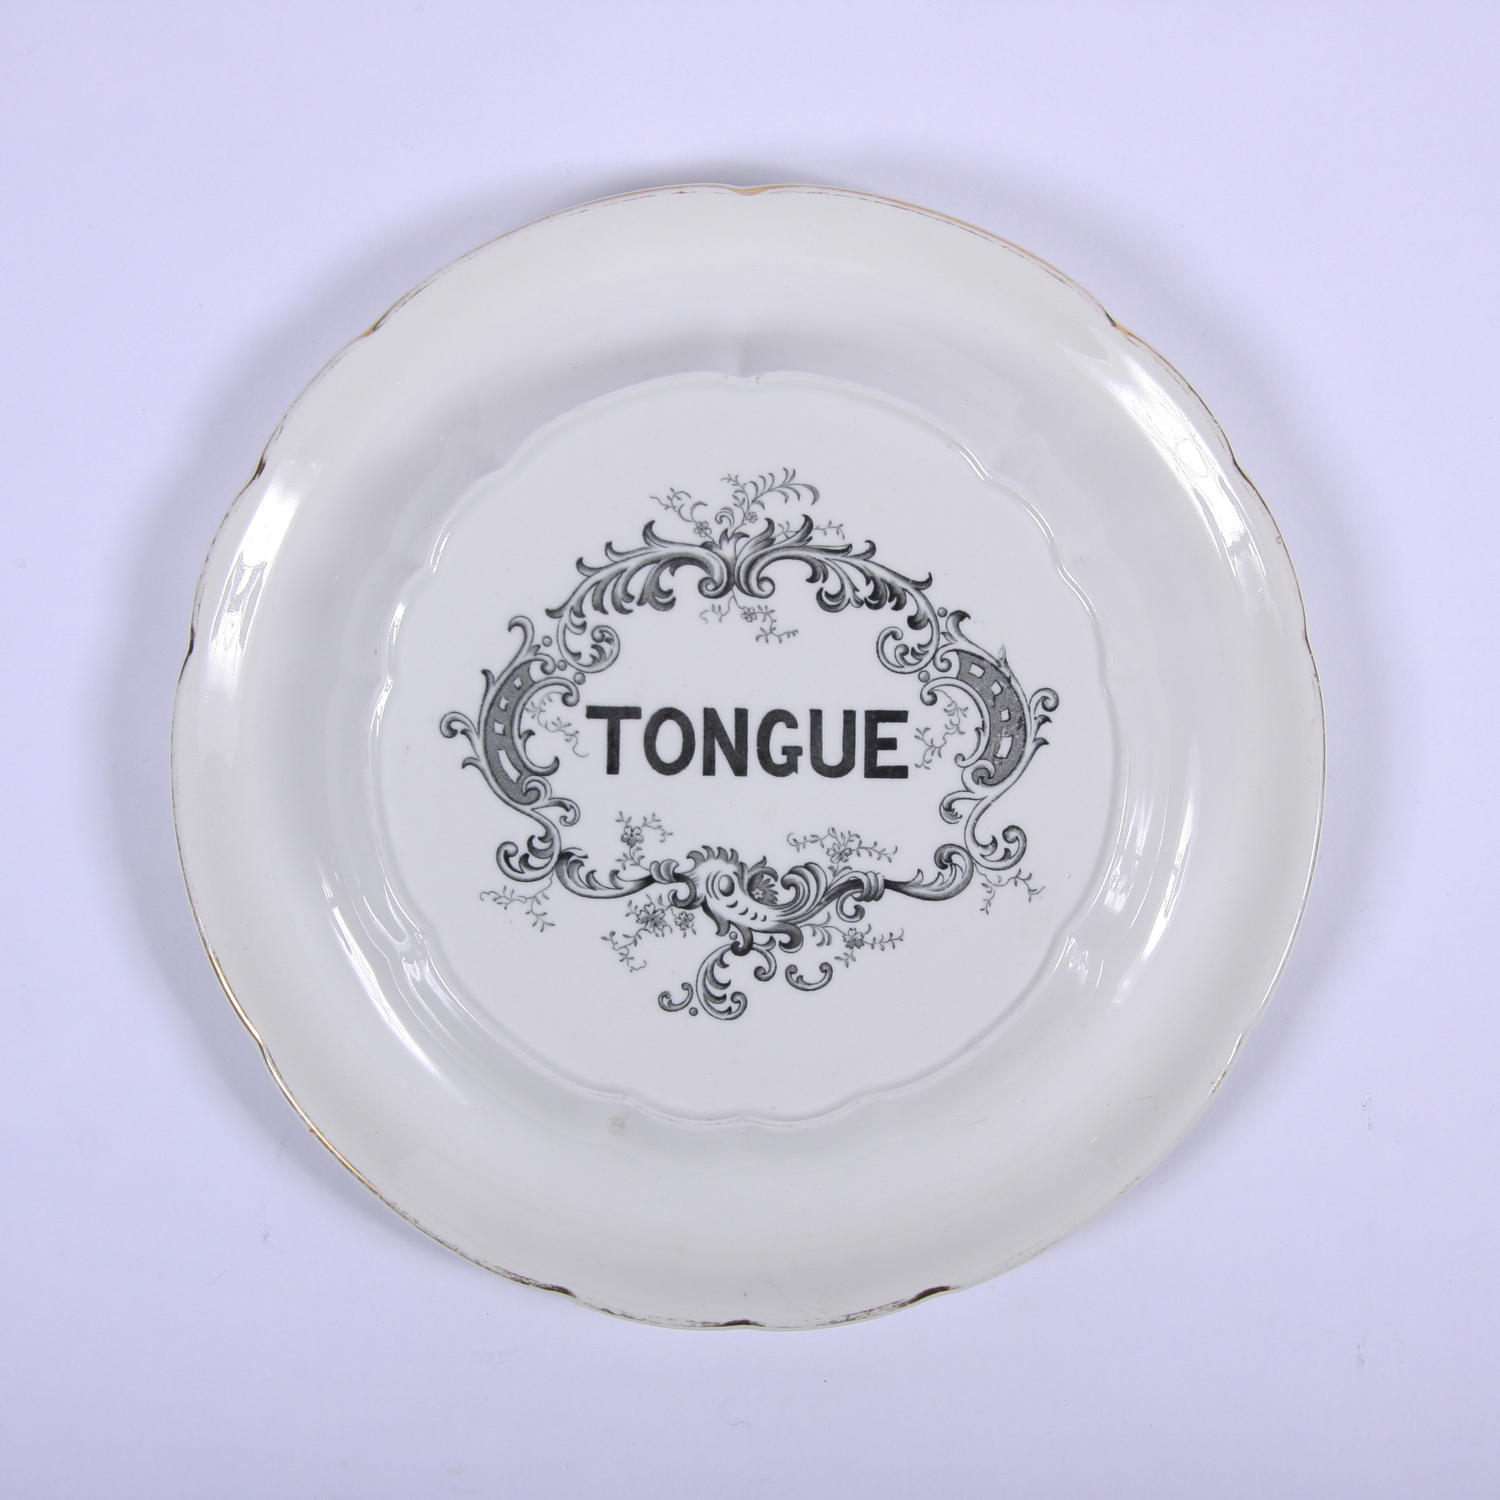 Tongue Plate